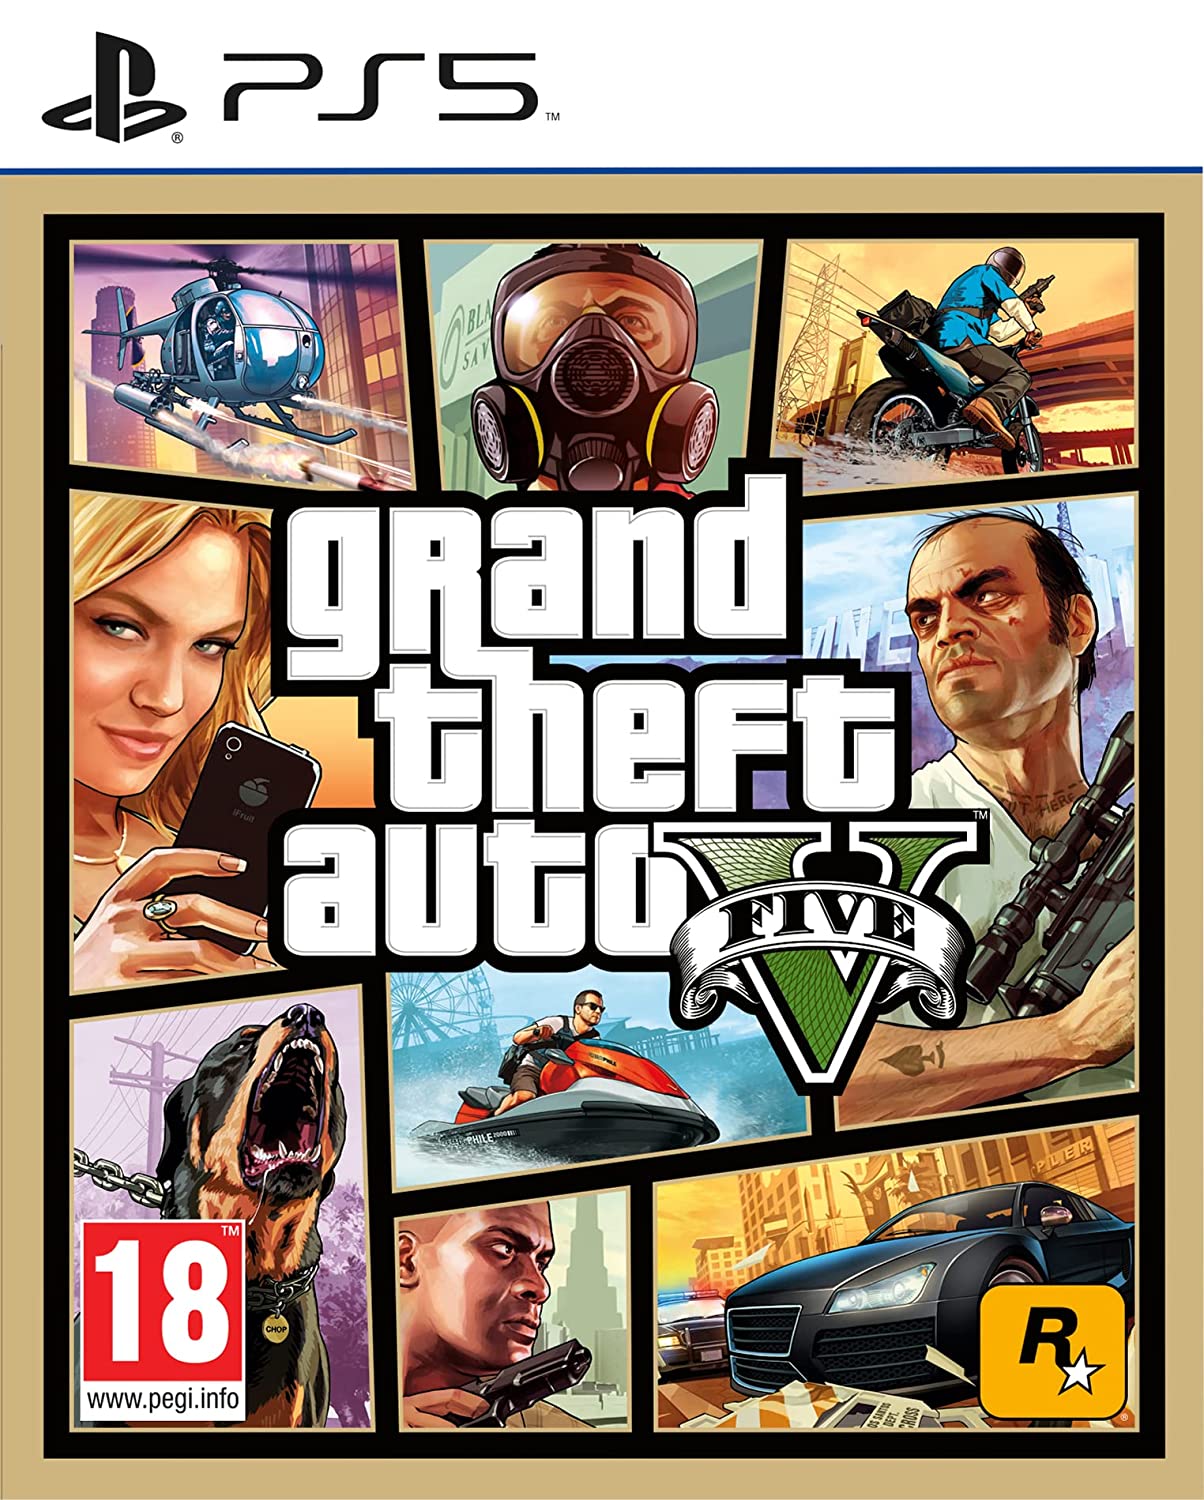 Grand Theft Auto 5-GTA 5 V PS5 (New)